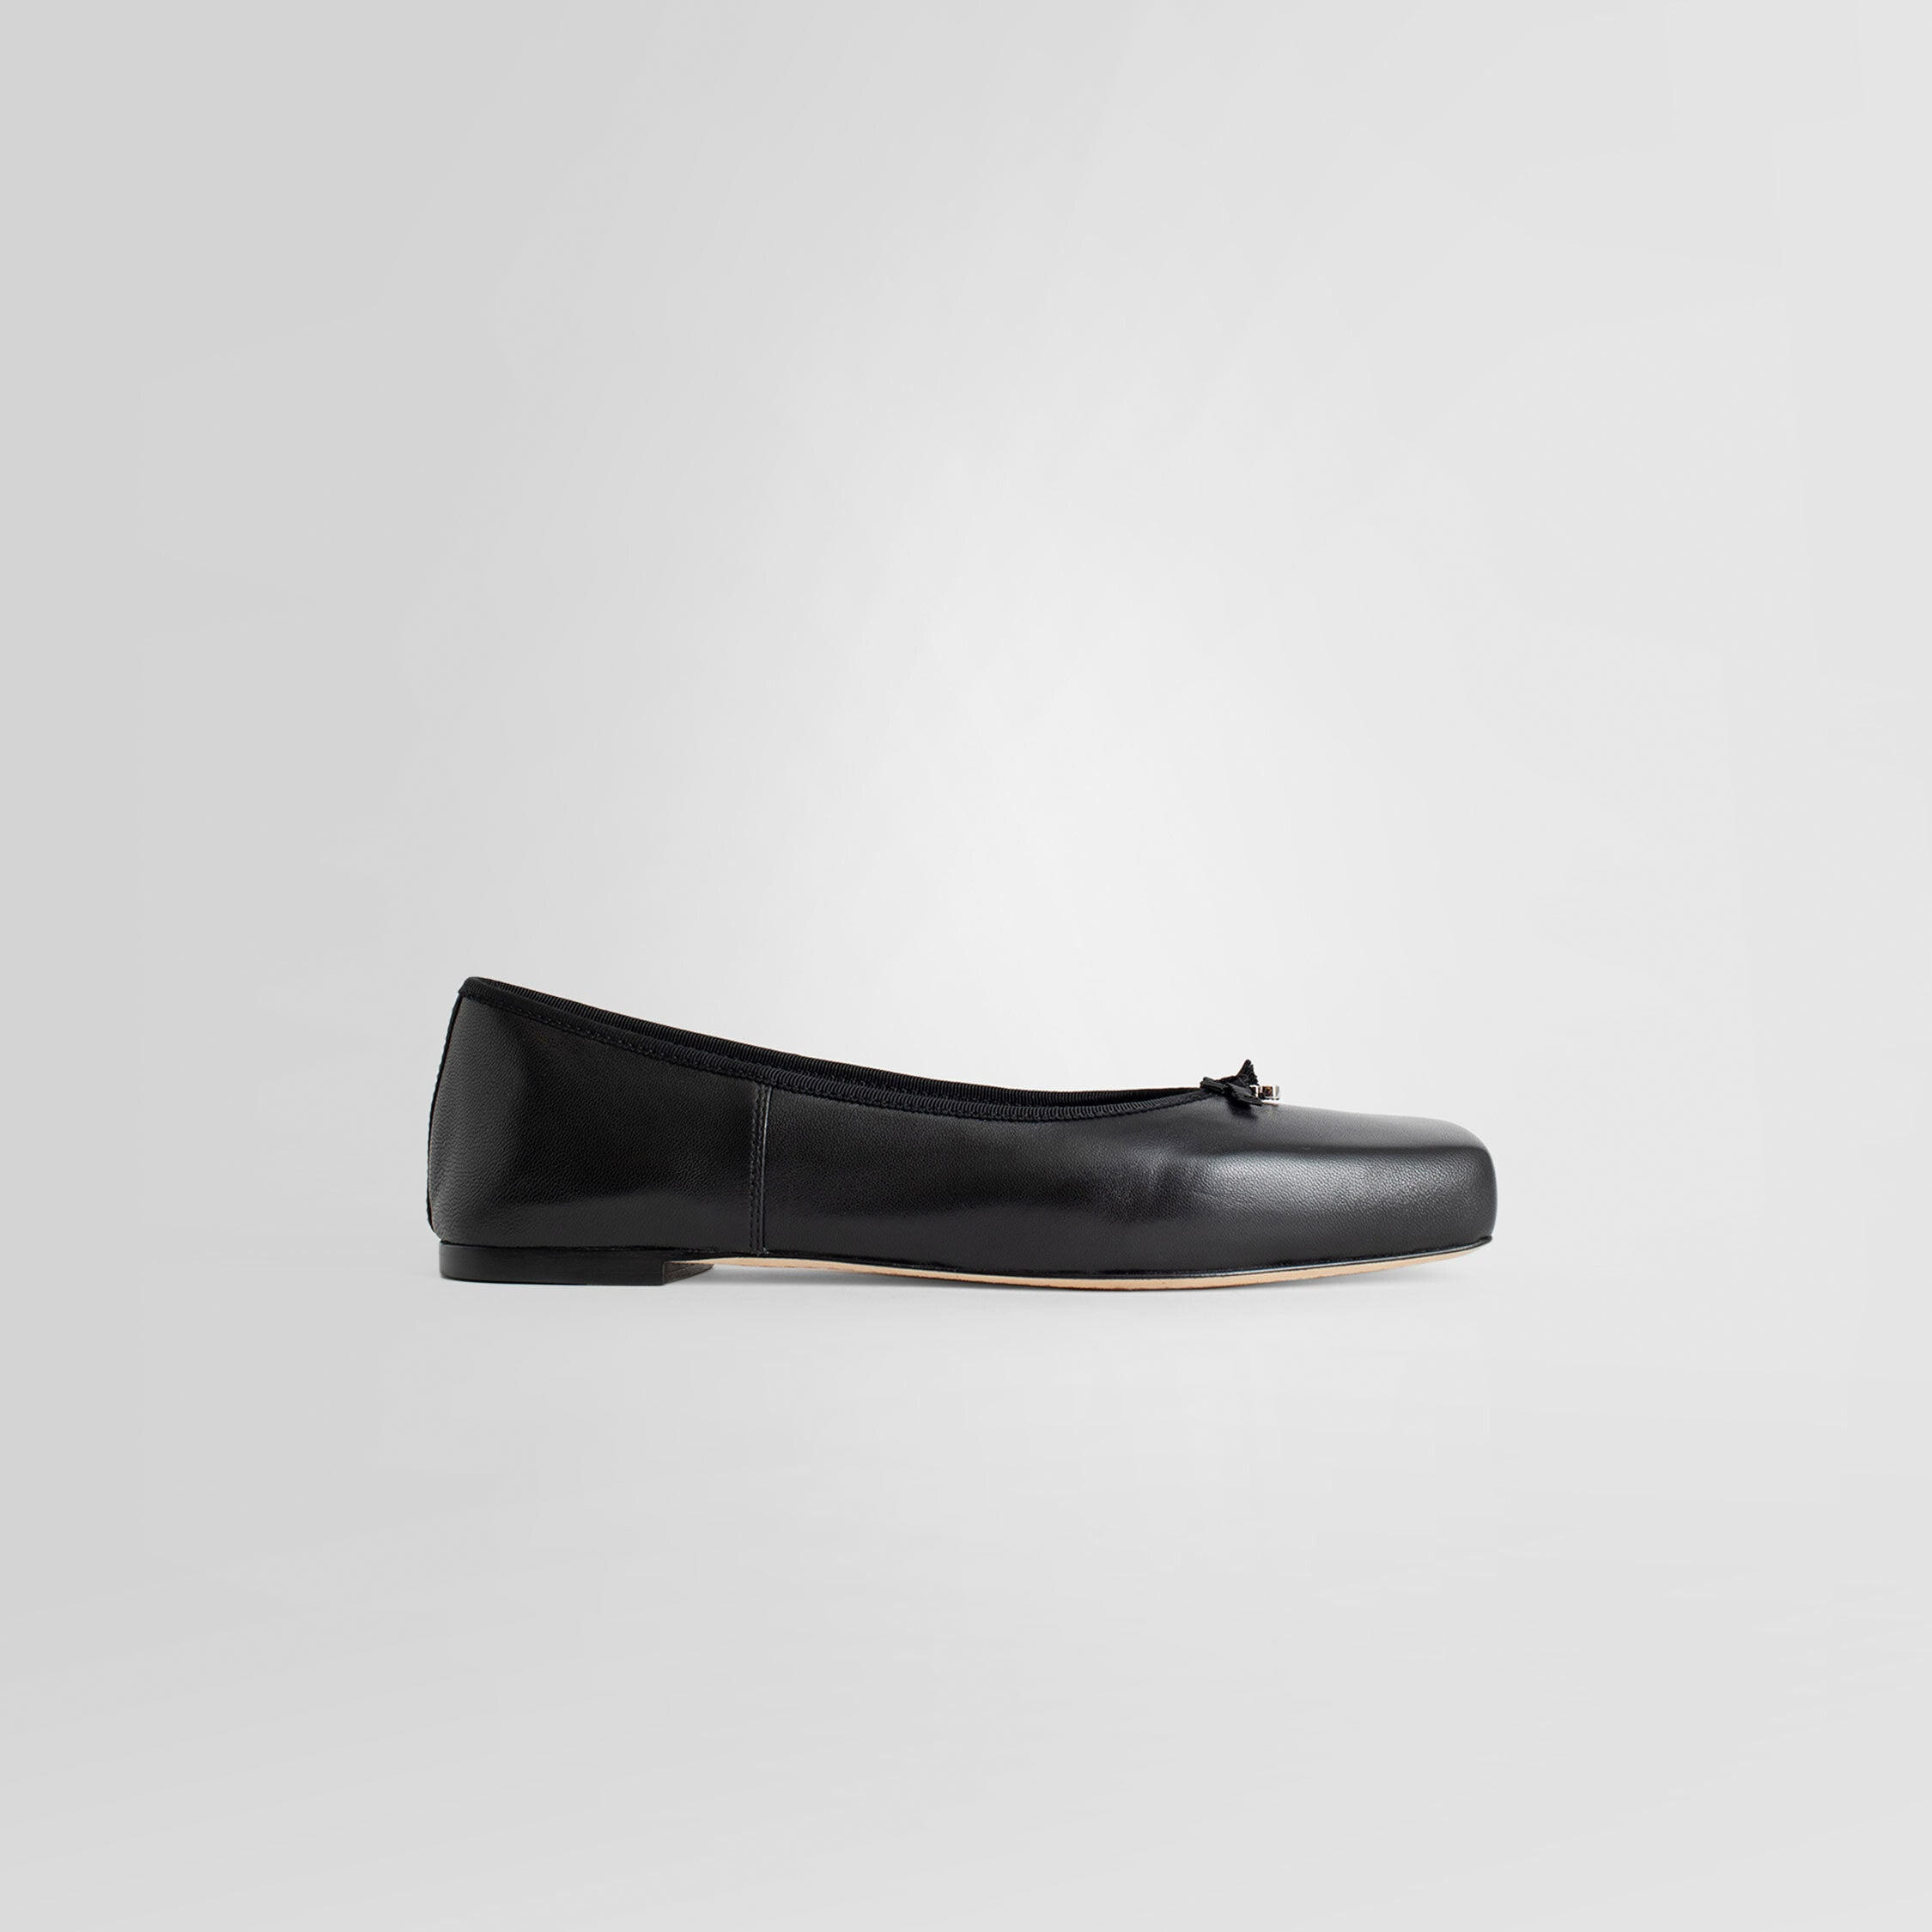 Alexander Wang Billie leather ballerina shoes - Black